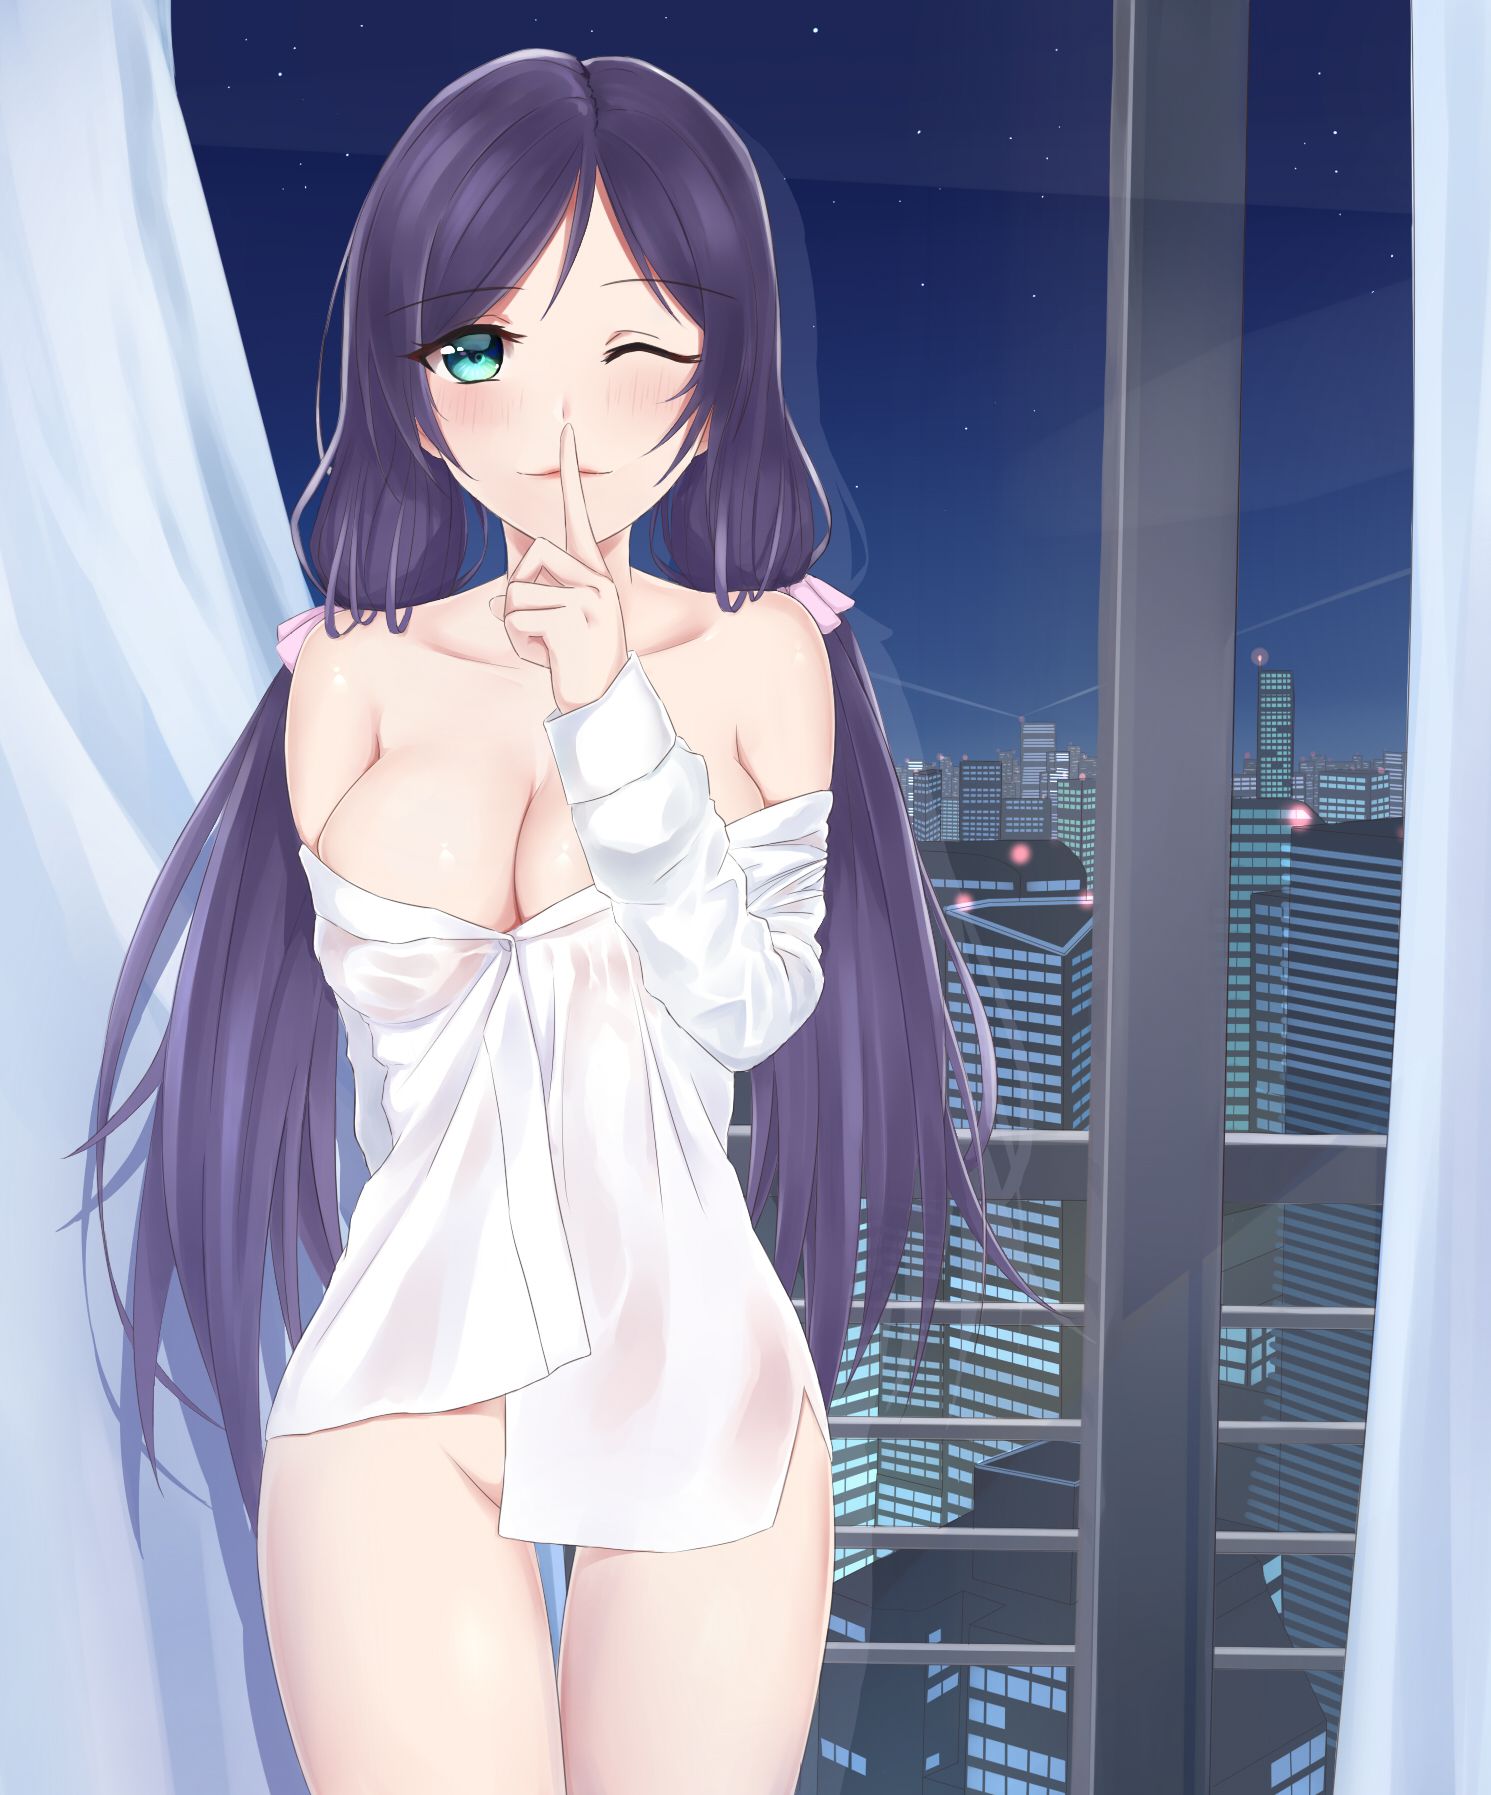 Erotic anime summary erotic images of beautiful girls in naked shirts [50 sheets] 47